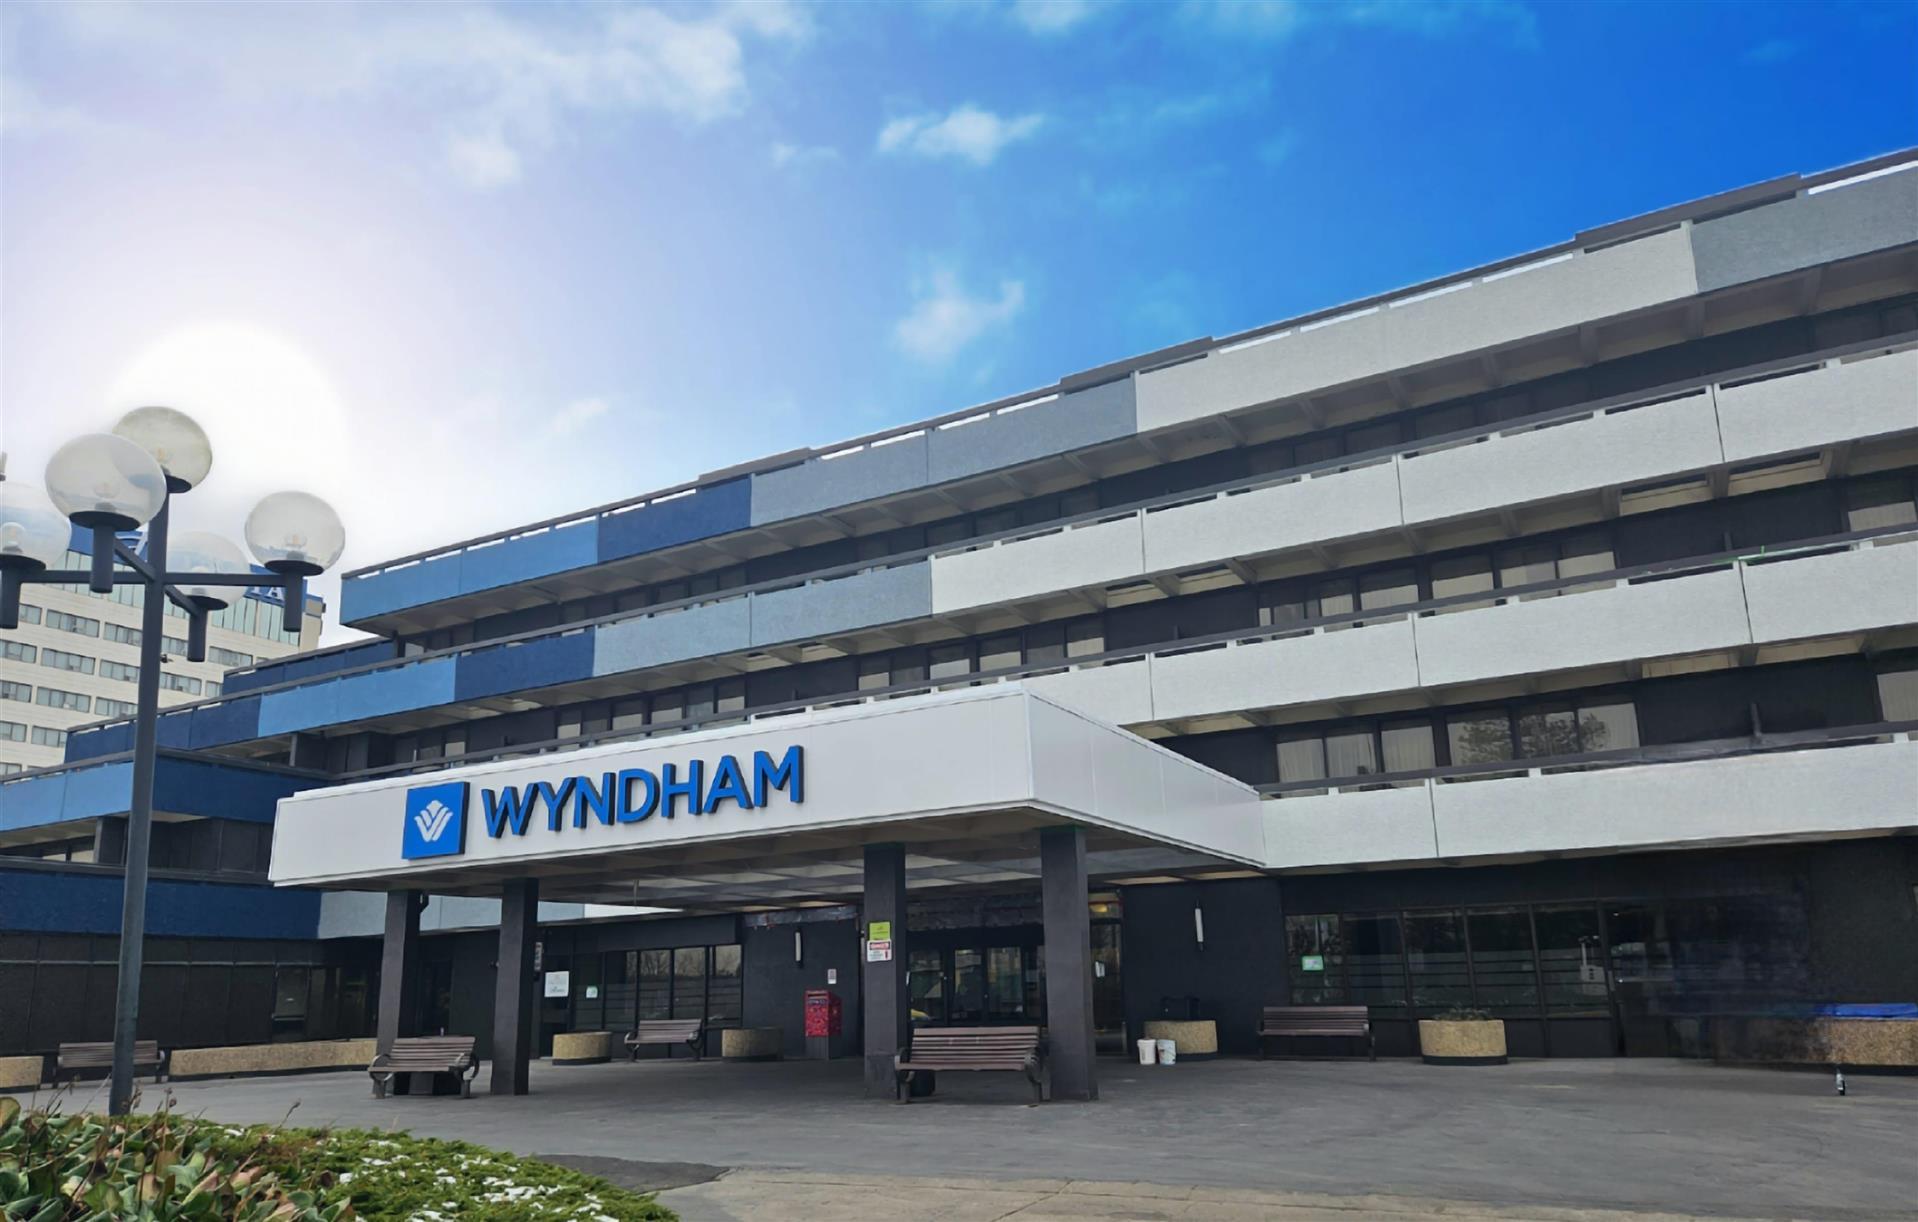 Wyndham Edmonton Hotel and Conference Centre in Edmonton, AB